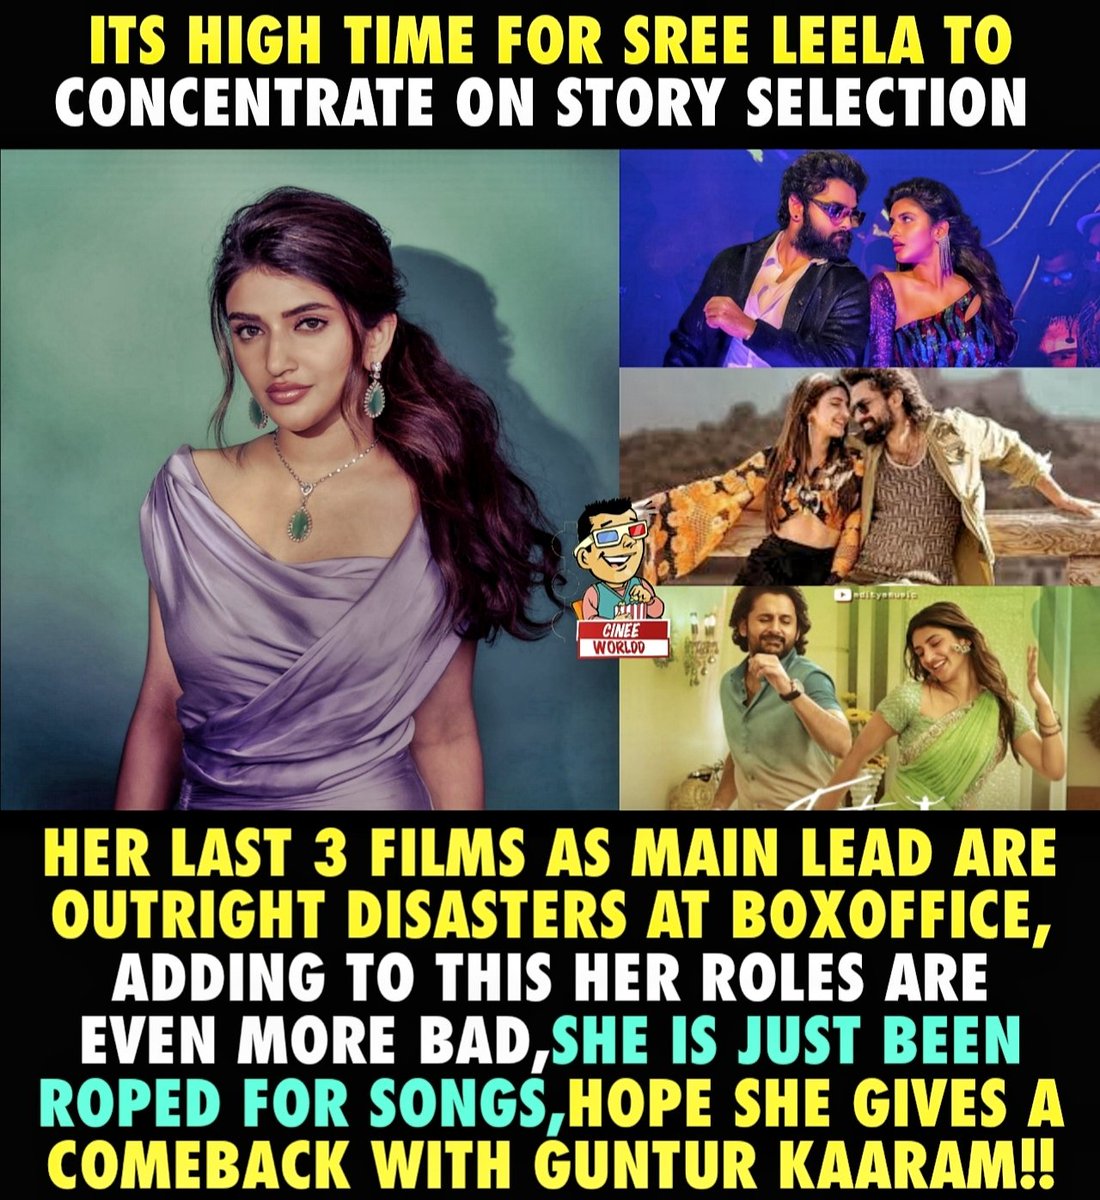 It High Time For #SreeLeela To Concentrate On Script Selection!!

#Skanda #Rapo #AadiKeshava #PanjaVaisshnavtej #ExtraOrdinaryMan #Nithiin #MaheshBabu #Gunturkaaram #Cinee_Worldd